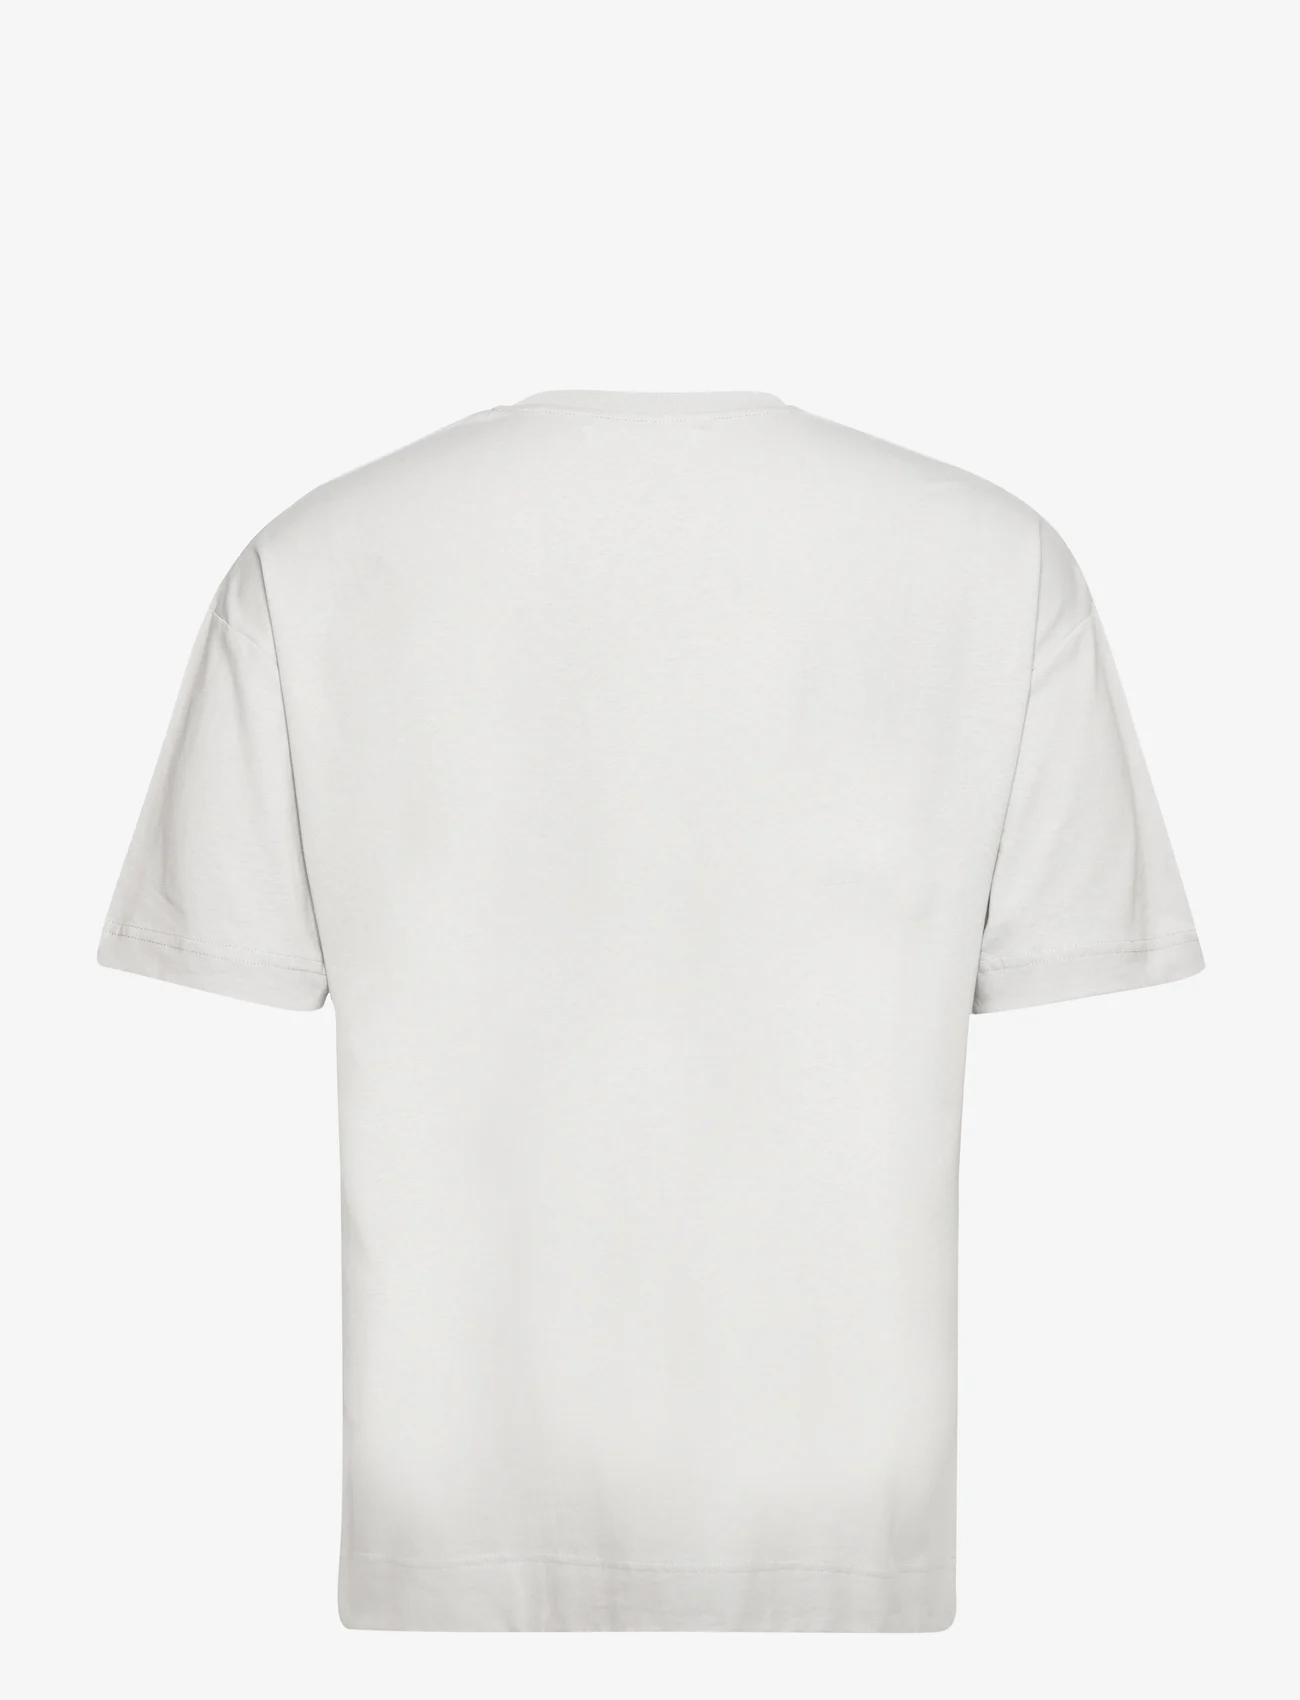 Samsøe Samsøe - Joel t-shirt 11415 - podstawowe koszulki - high-rise - 1